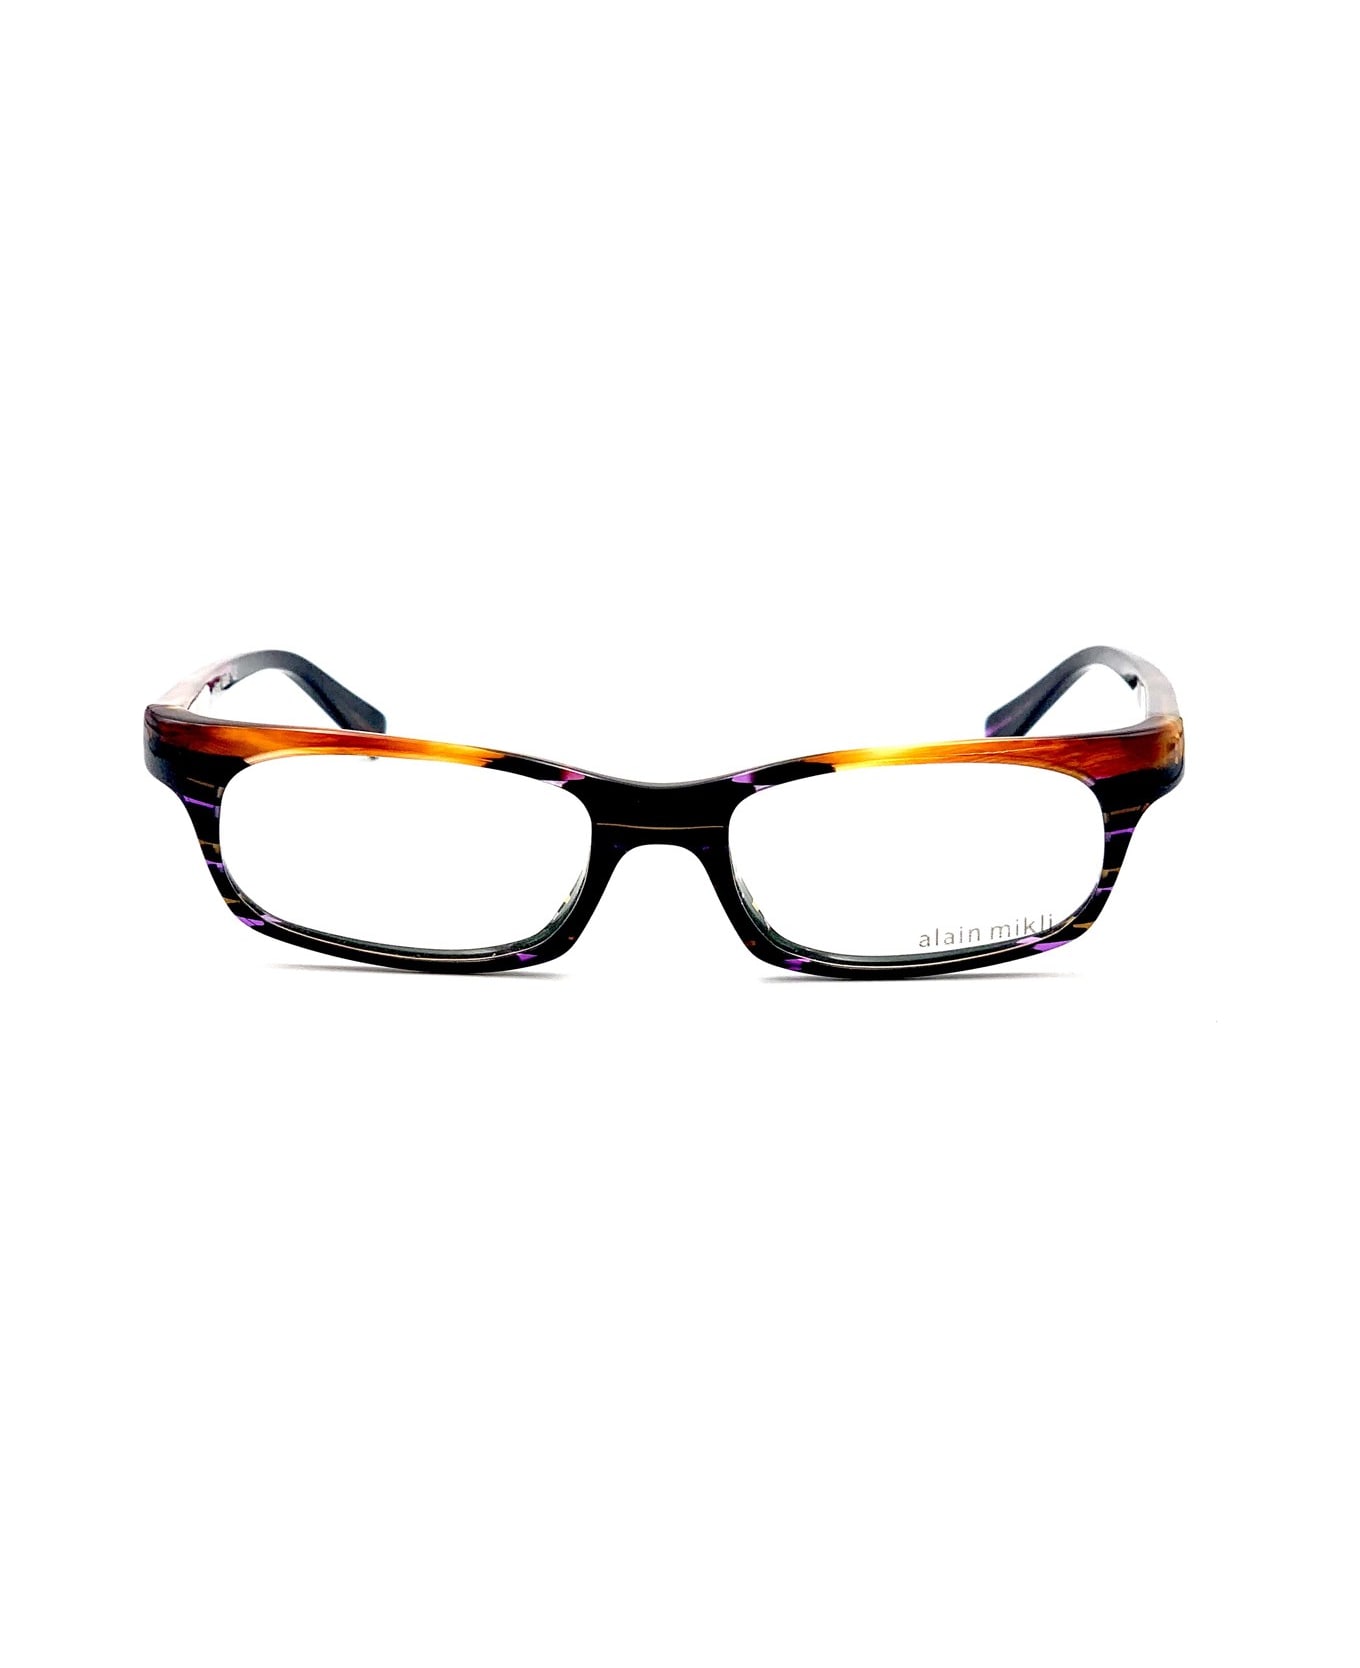 Alain Mikli A0691 Glasses - Multicolore アイウェア